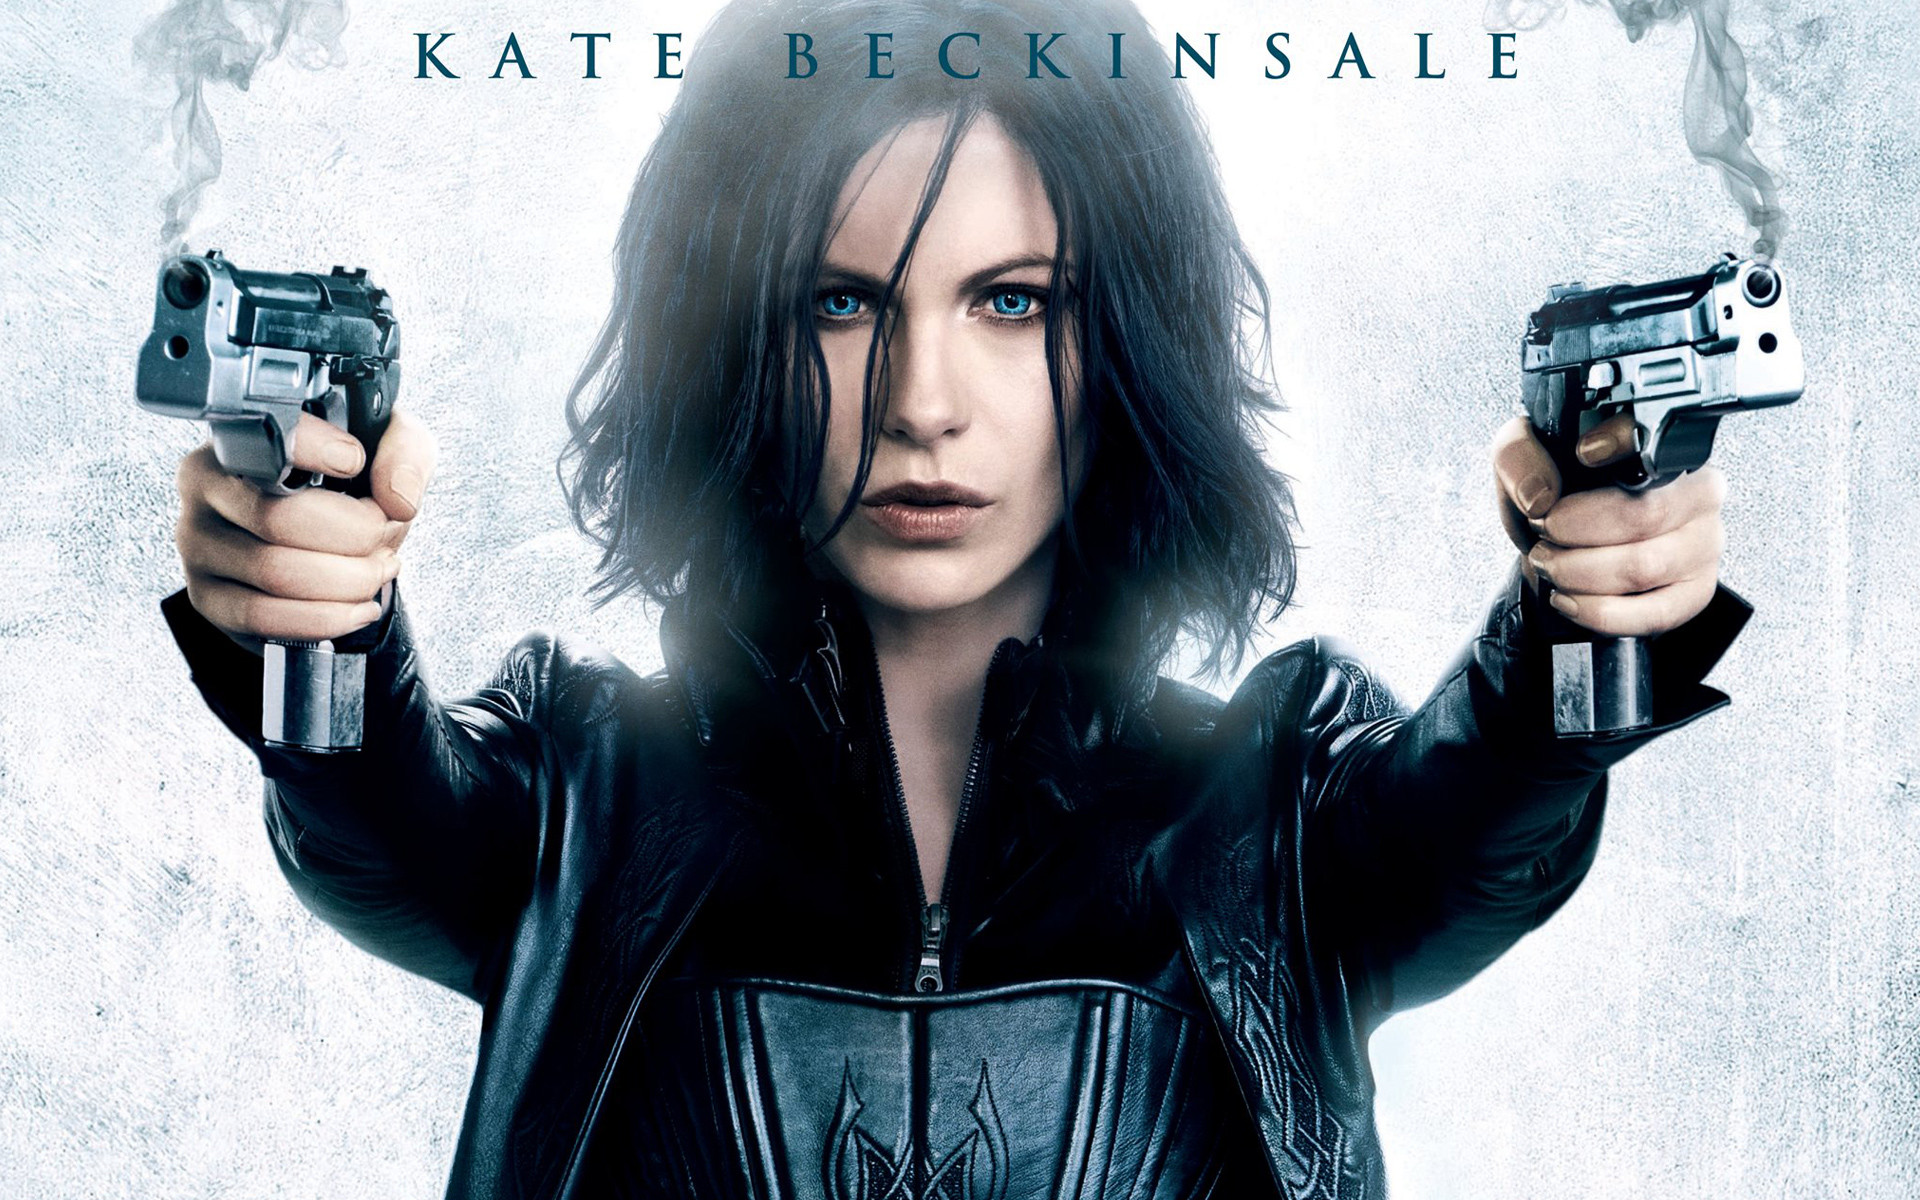 1920x1200 Kate Beckinsale in Underworld 4 in 1920Ã1200 Pixel, Lady with Two Guns,  Someone is So Dead This Time – TV & Movies Wallpaper